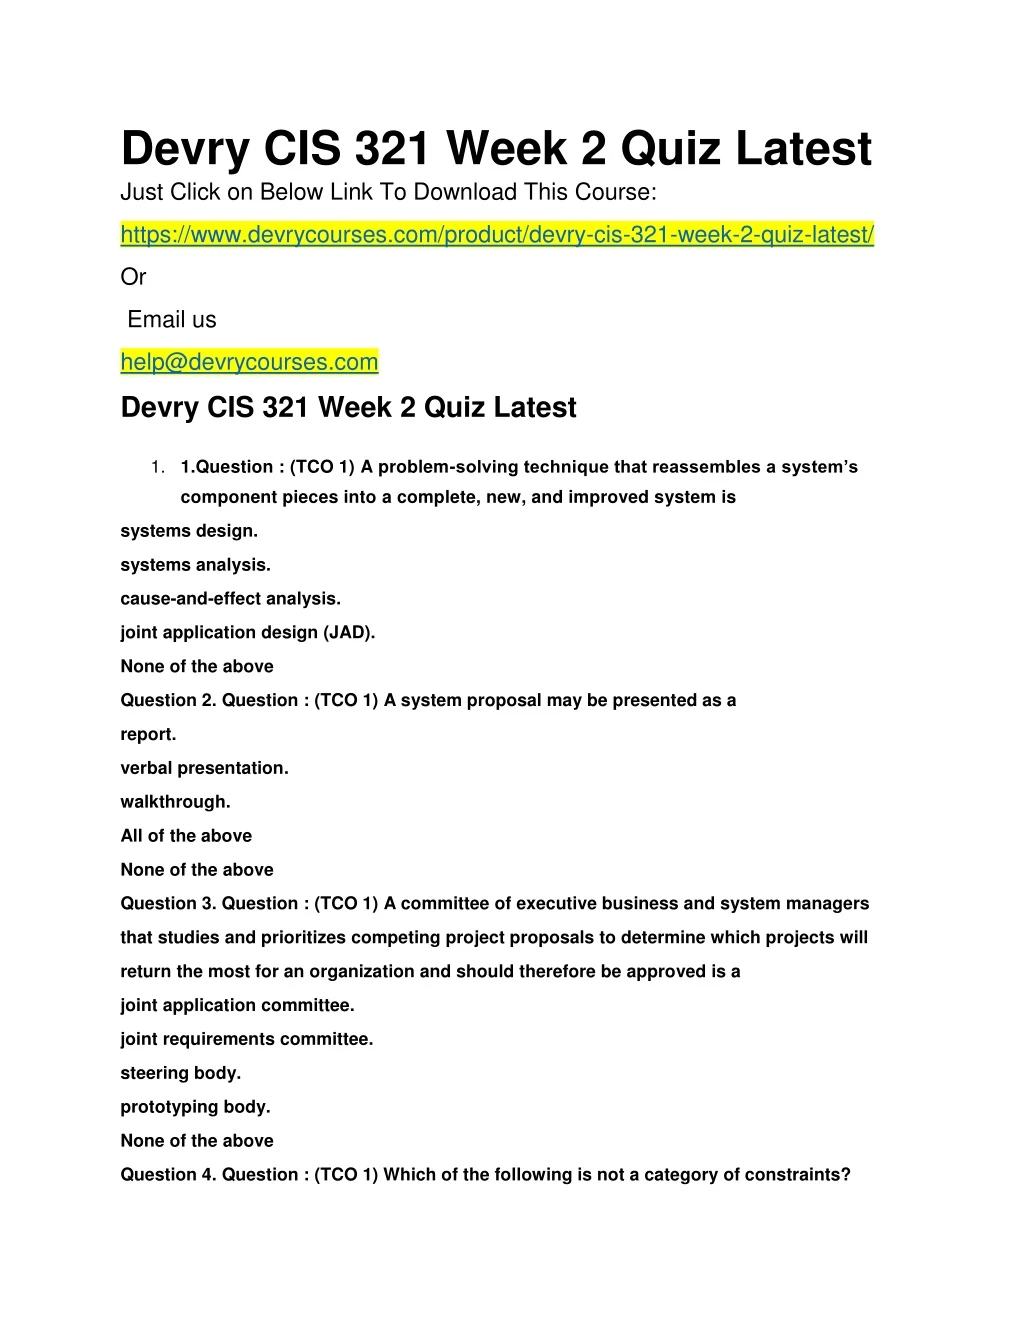 devry cis 321 week 2 quiz latest just click